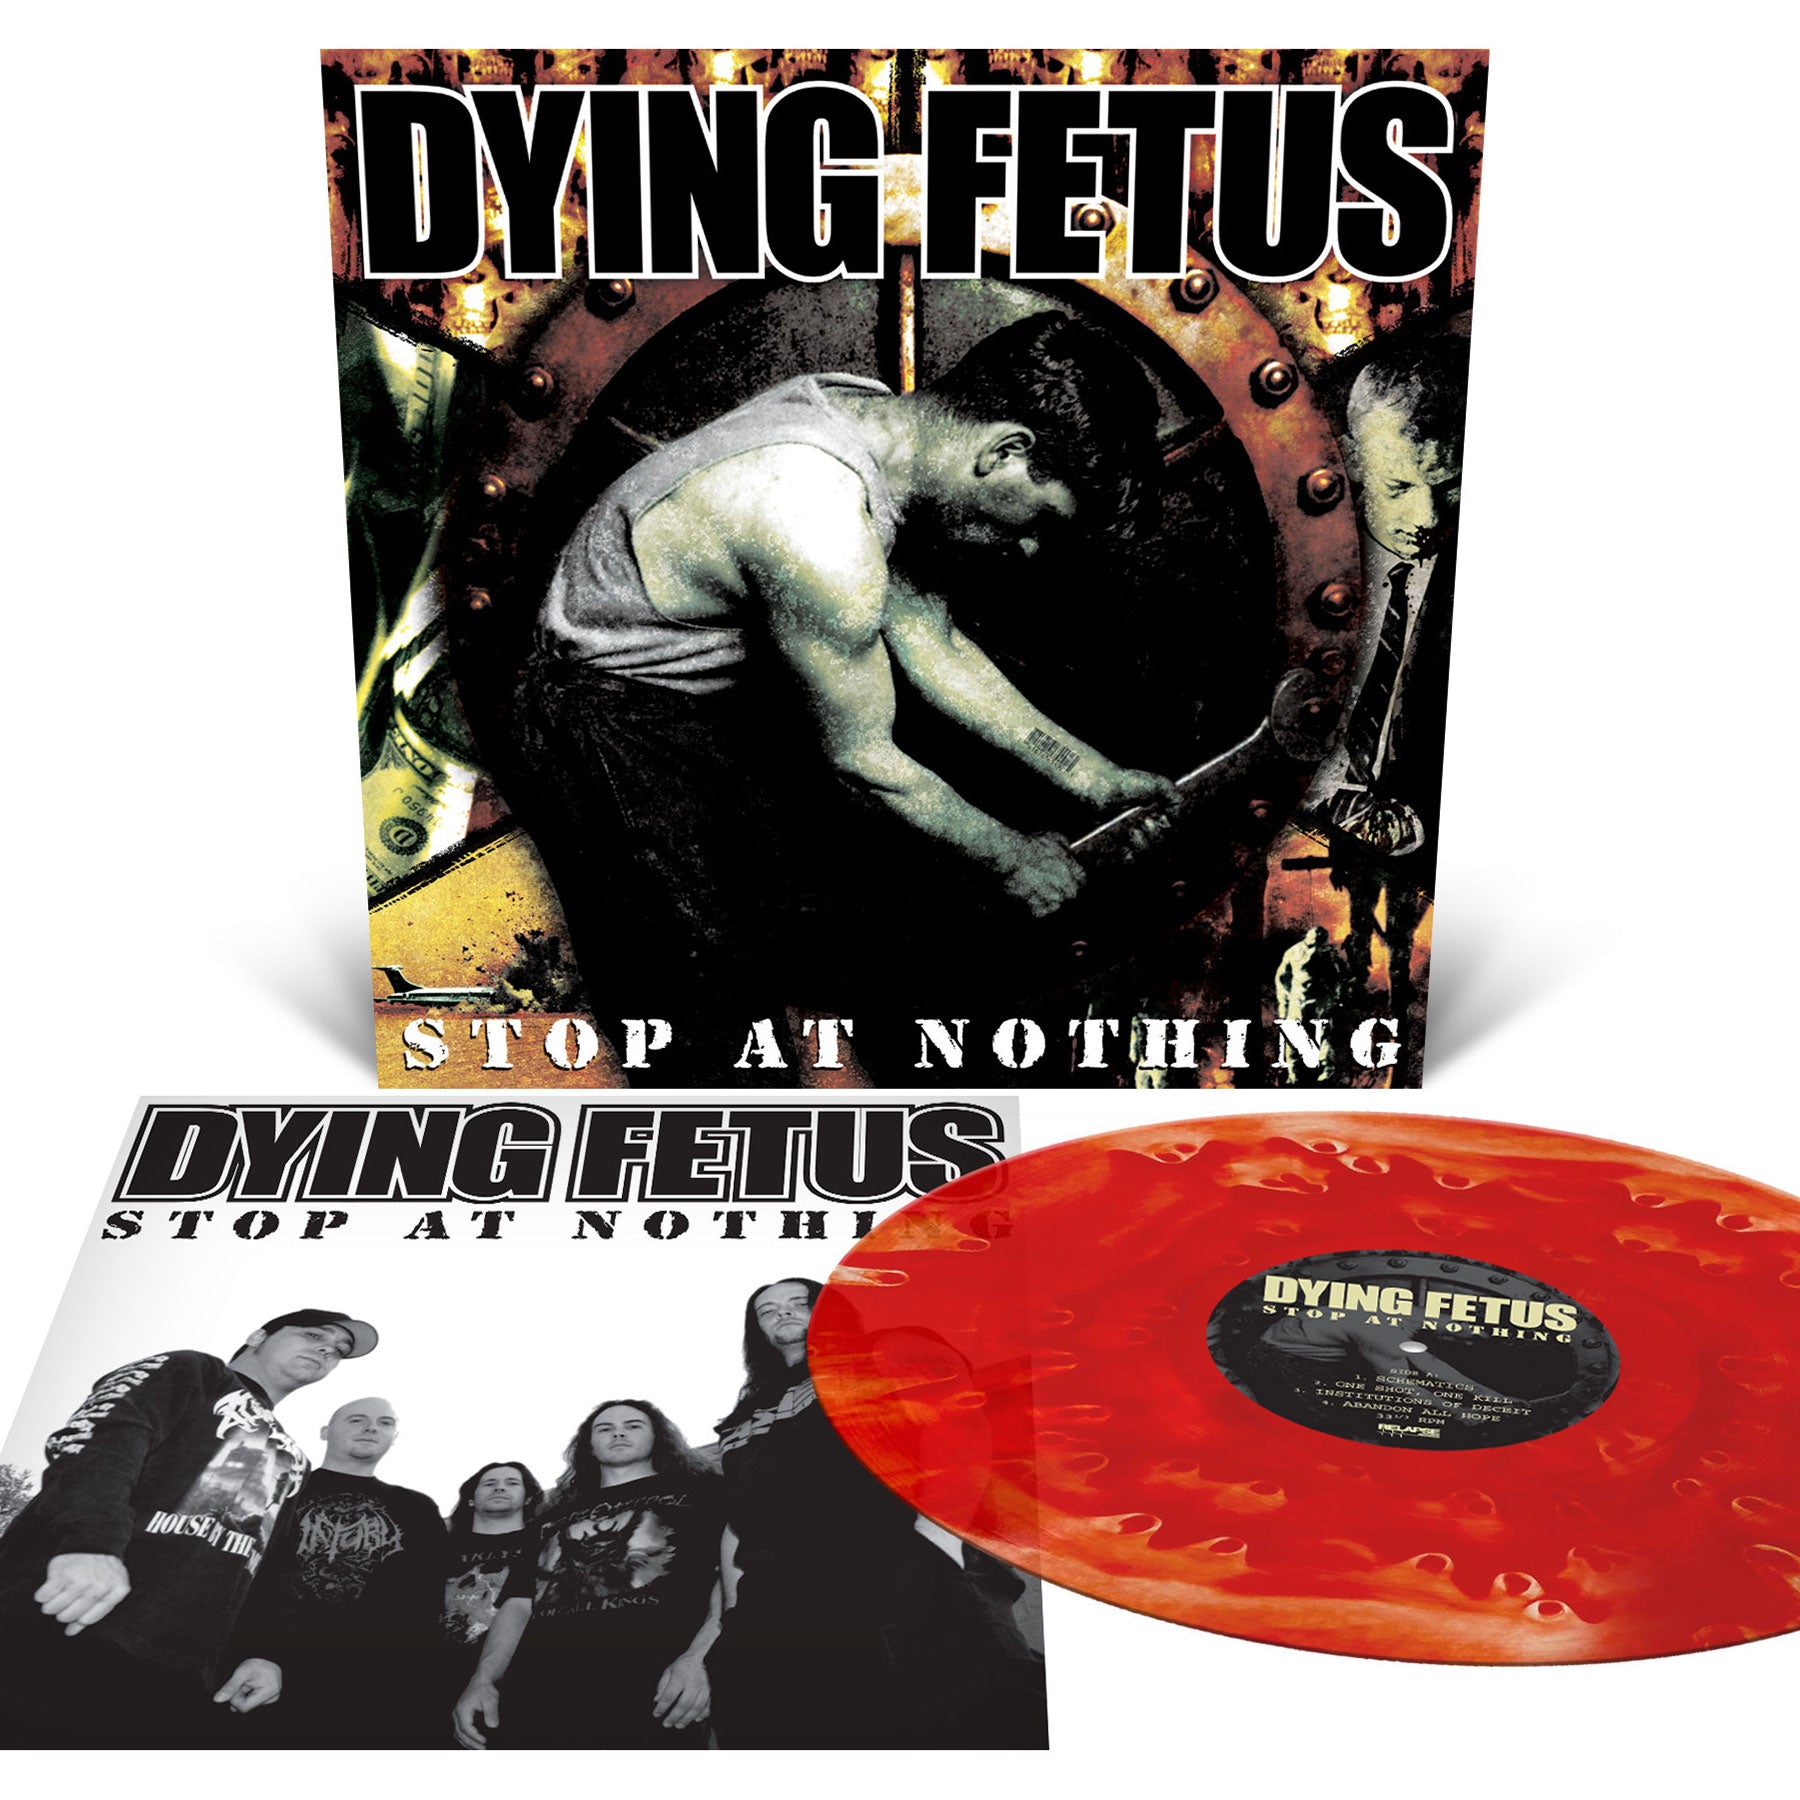 Dying Fetus "Stop At Nothing" 12"